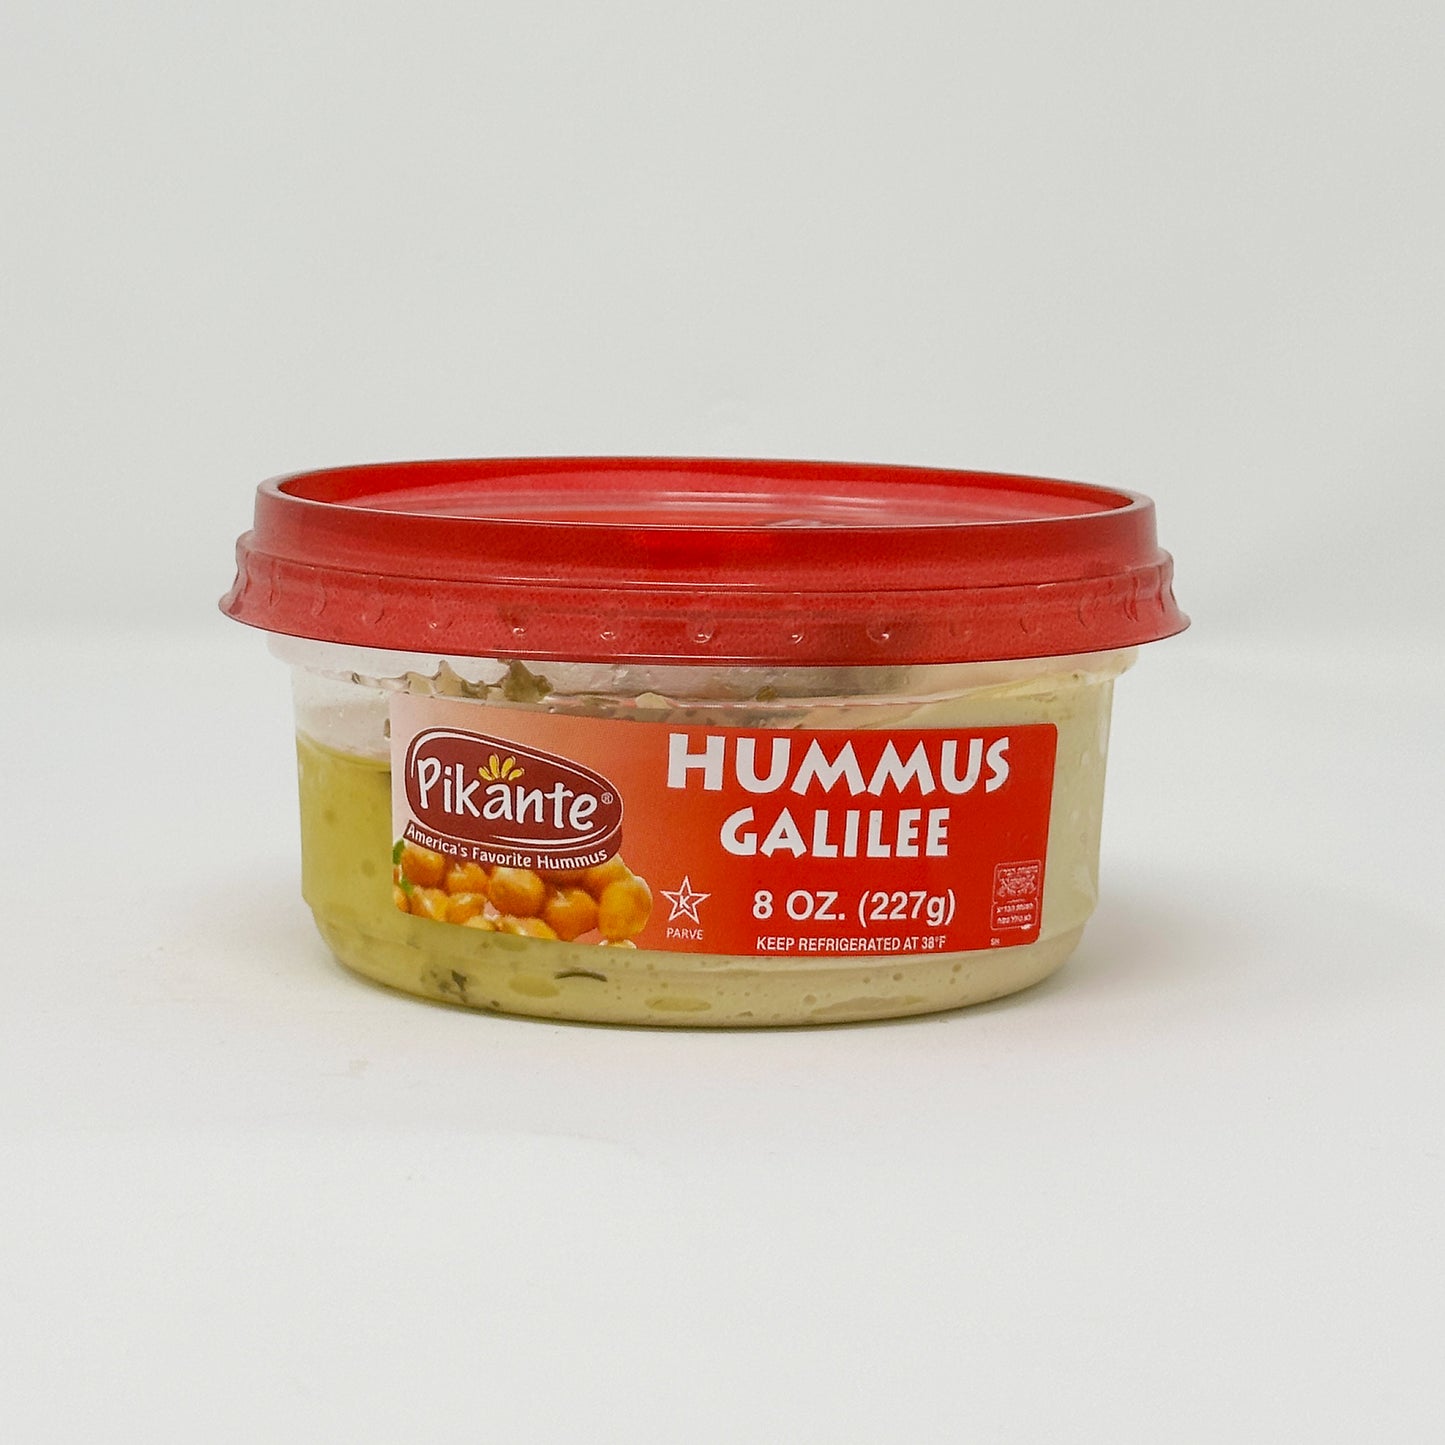 Pikante Hummus Galiee 8 oz